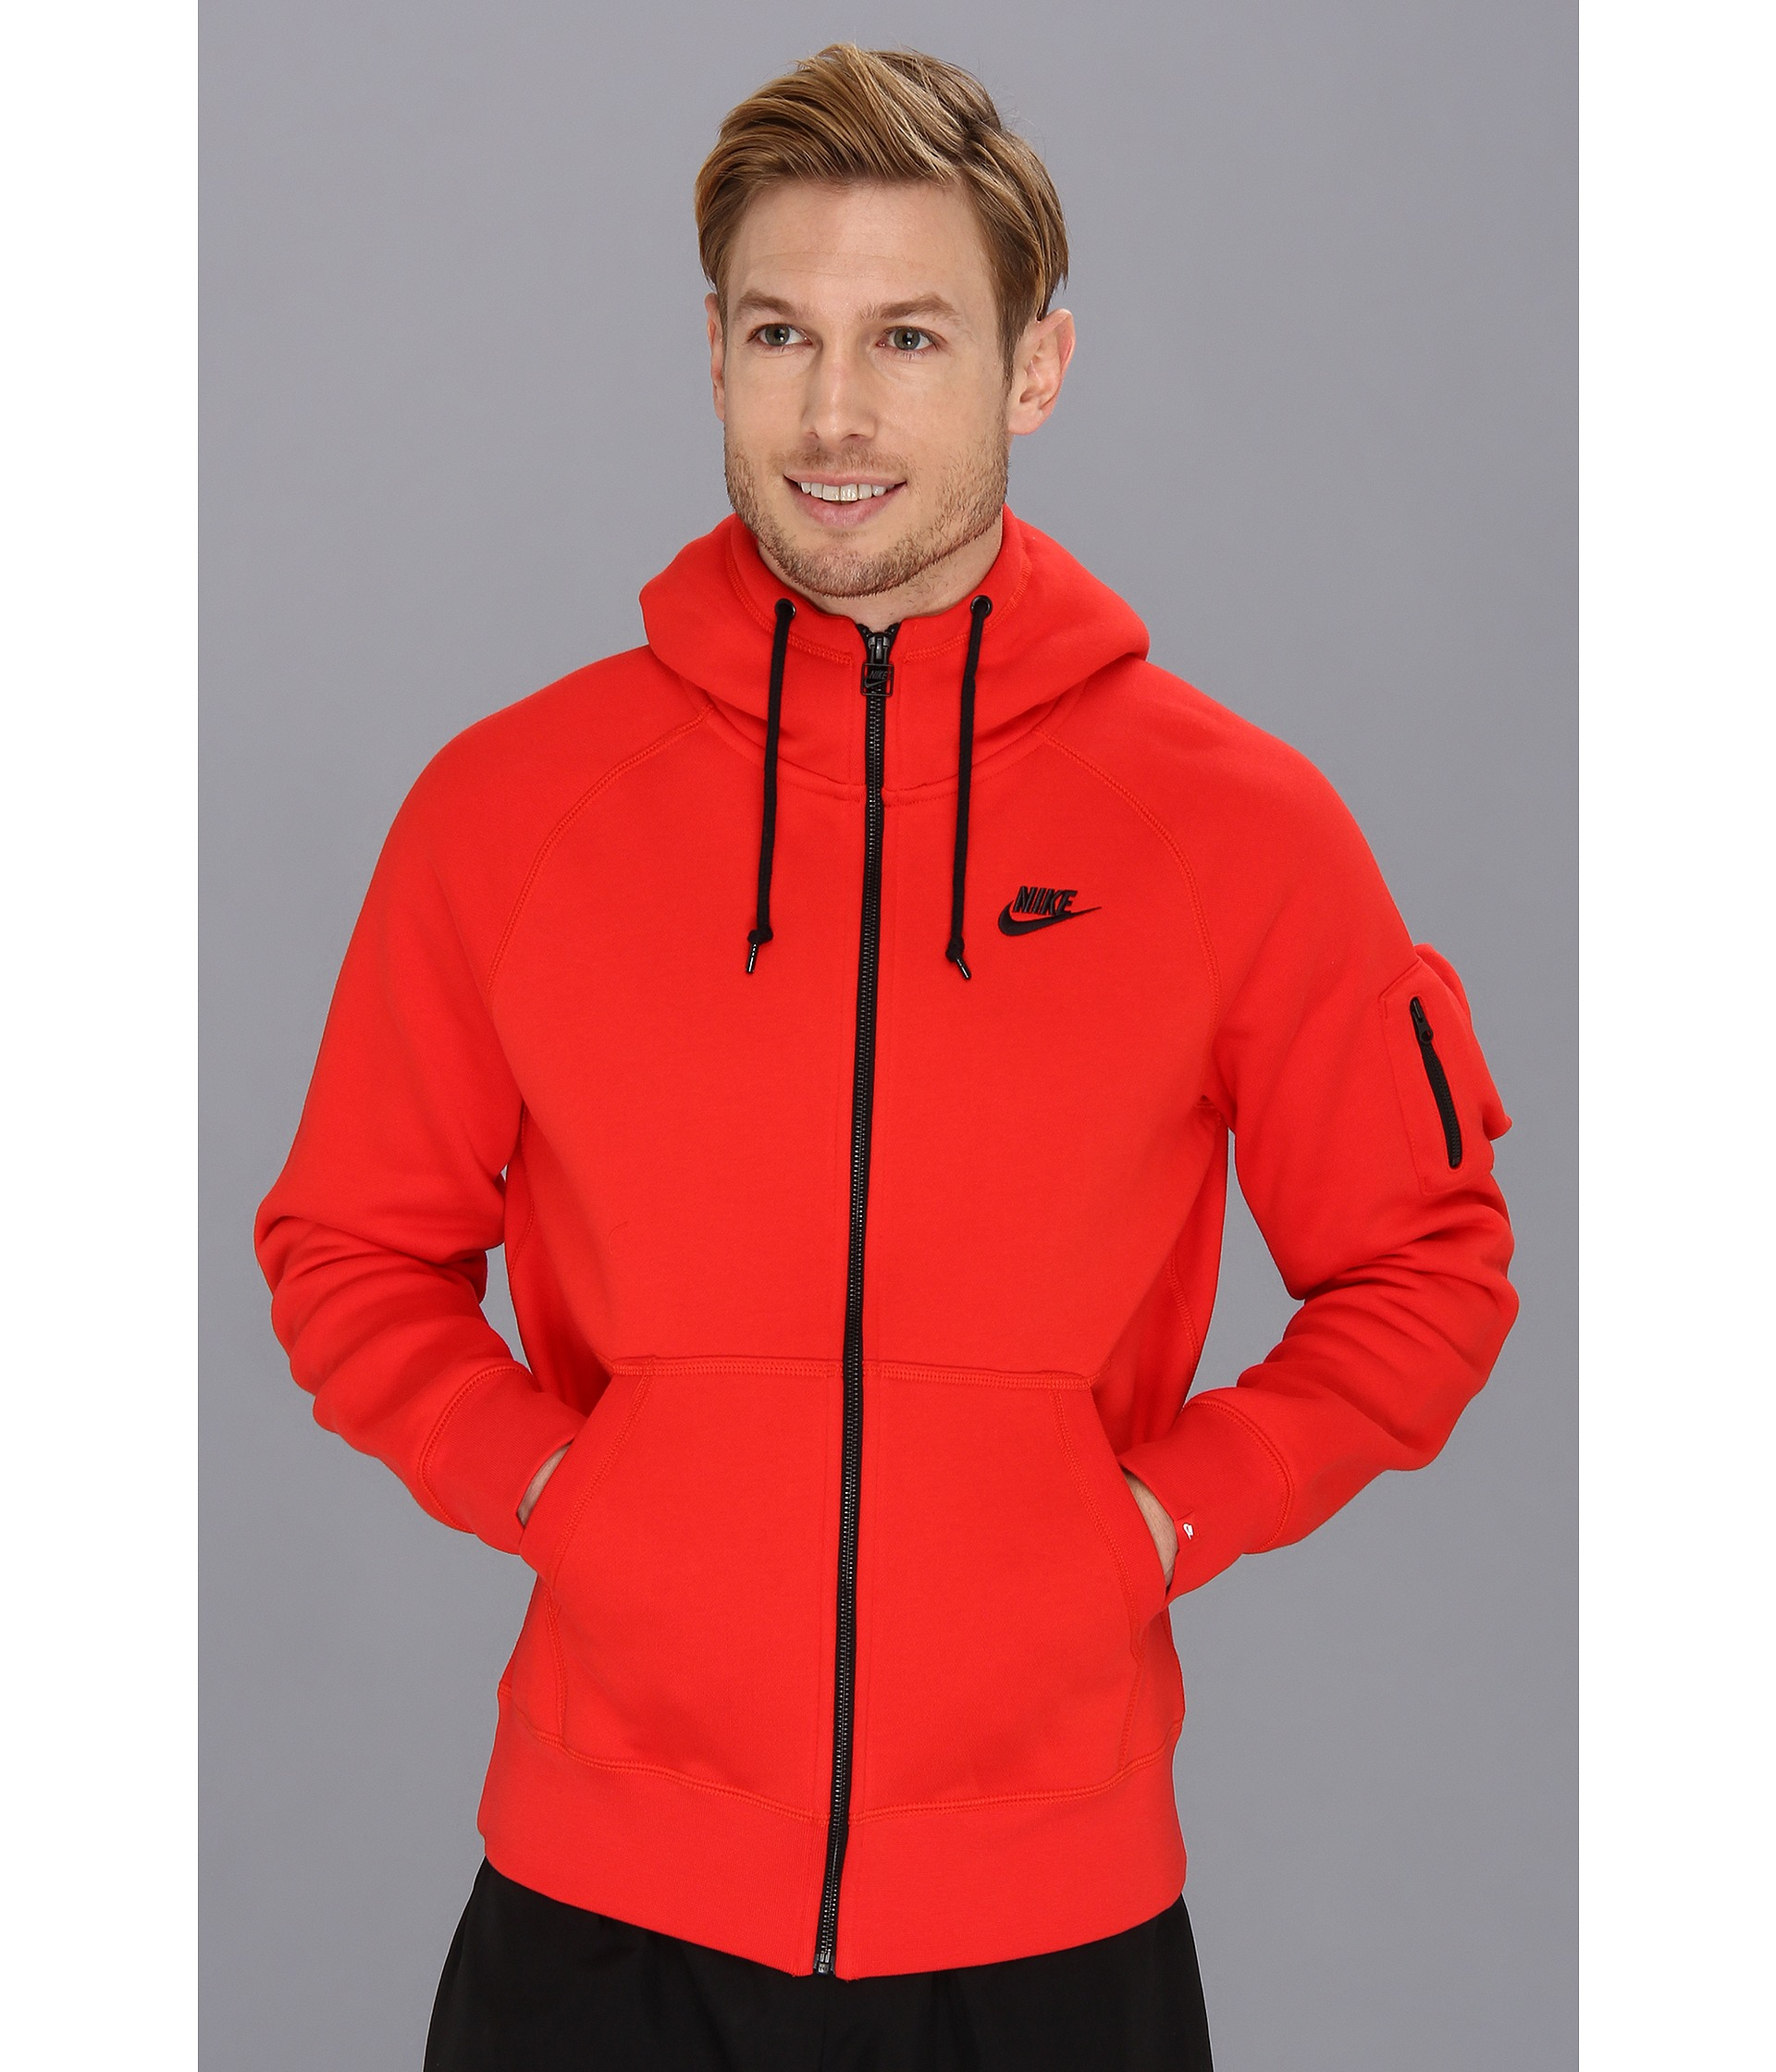 Nike Aw77 Fleece Fz Hoodie in Red for Men - Lyst